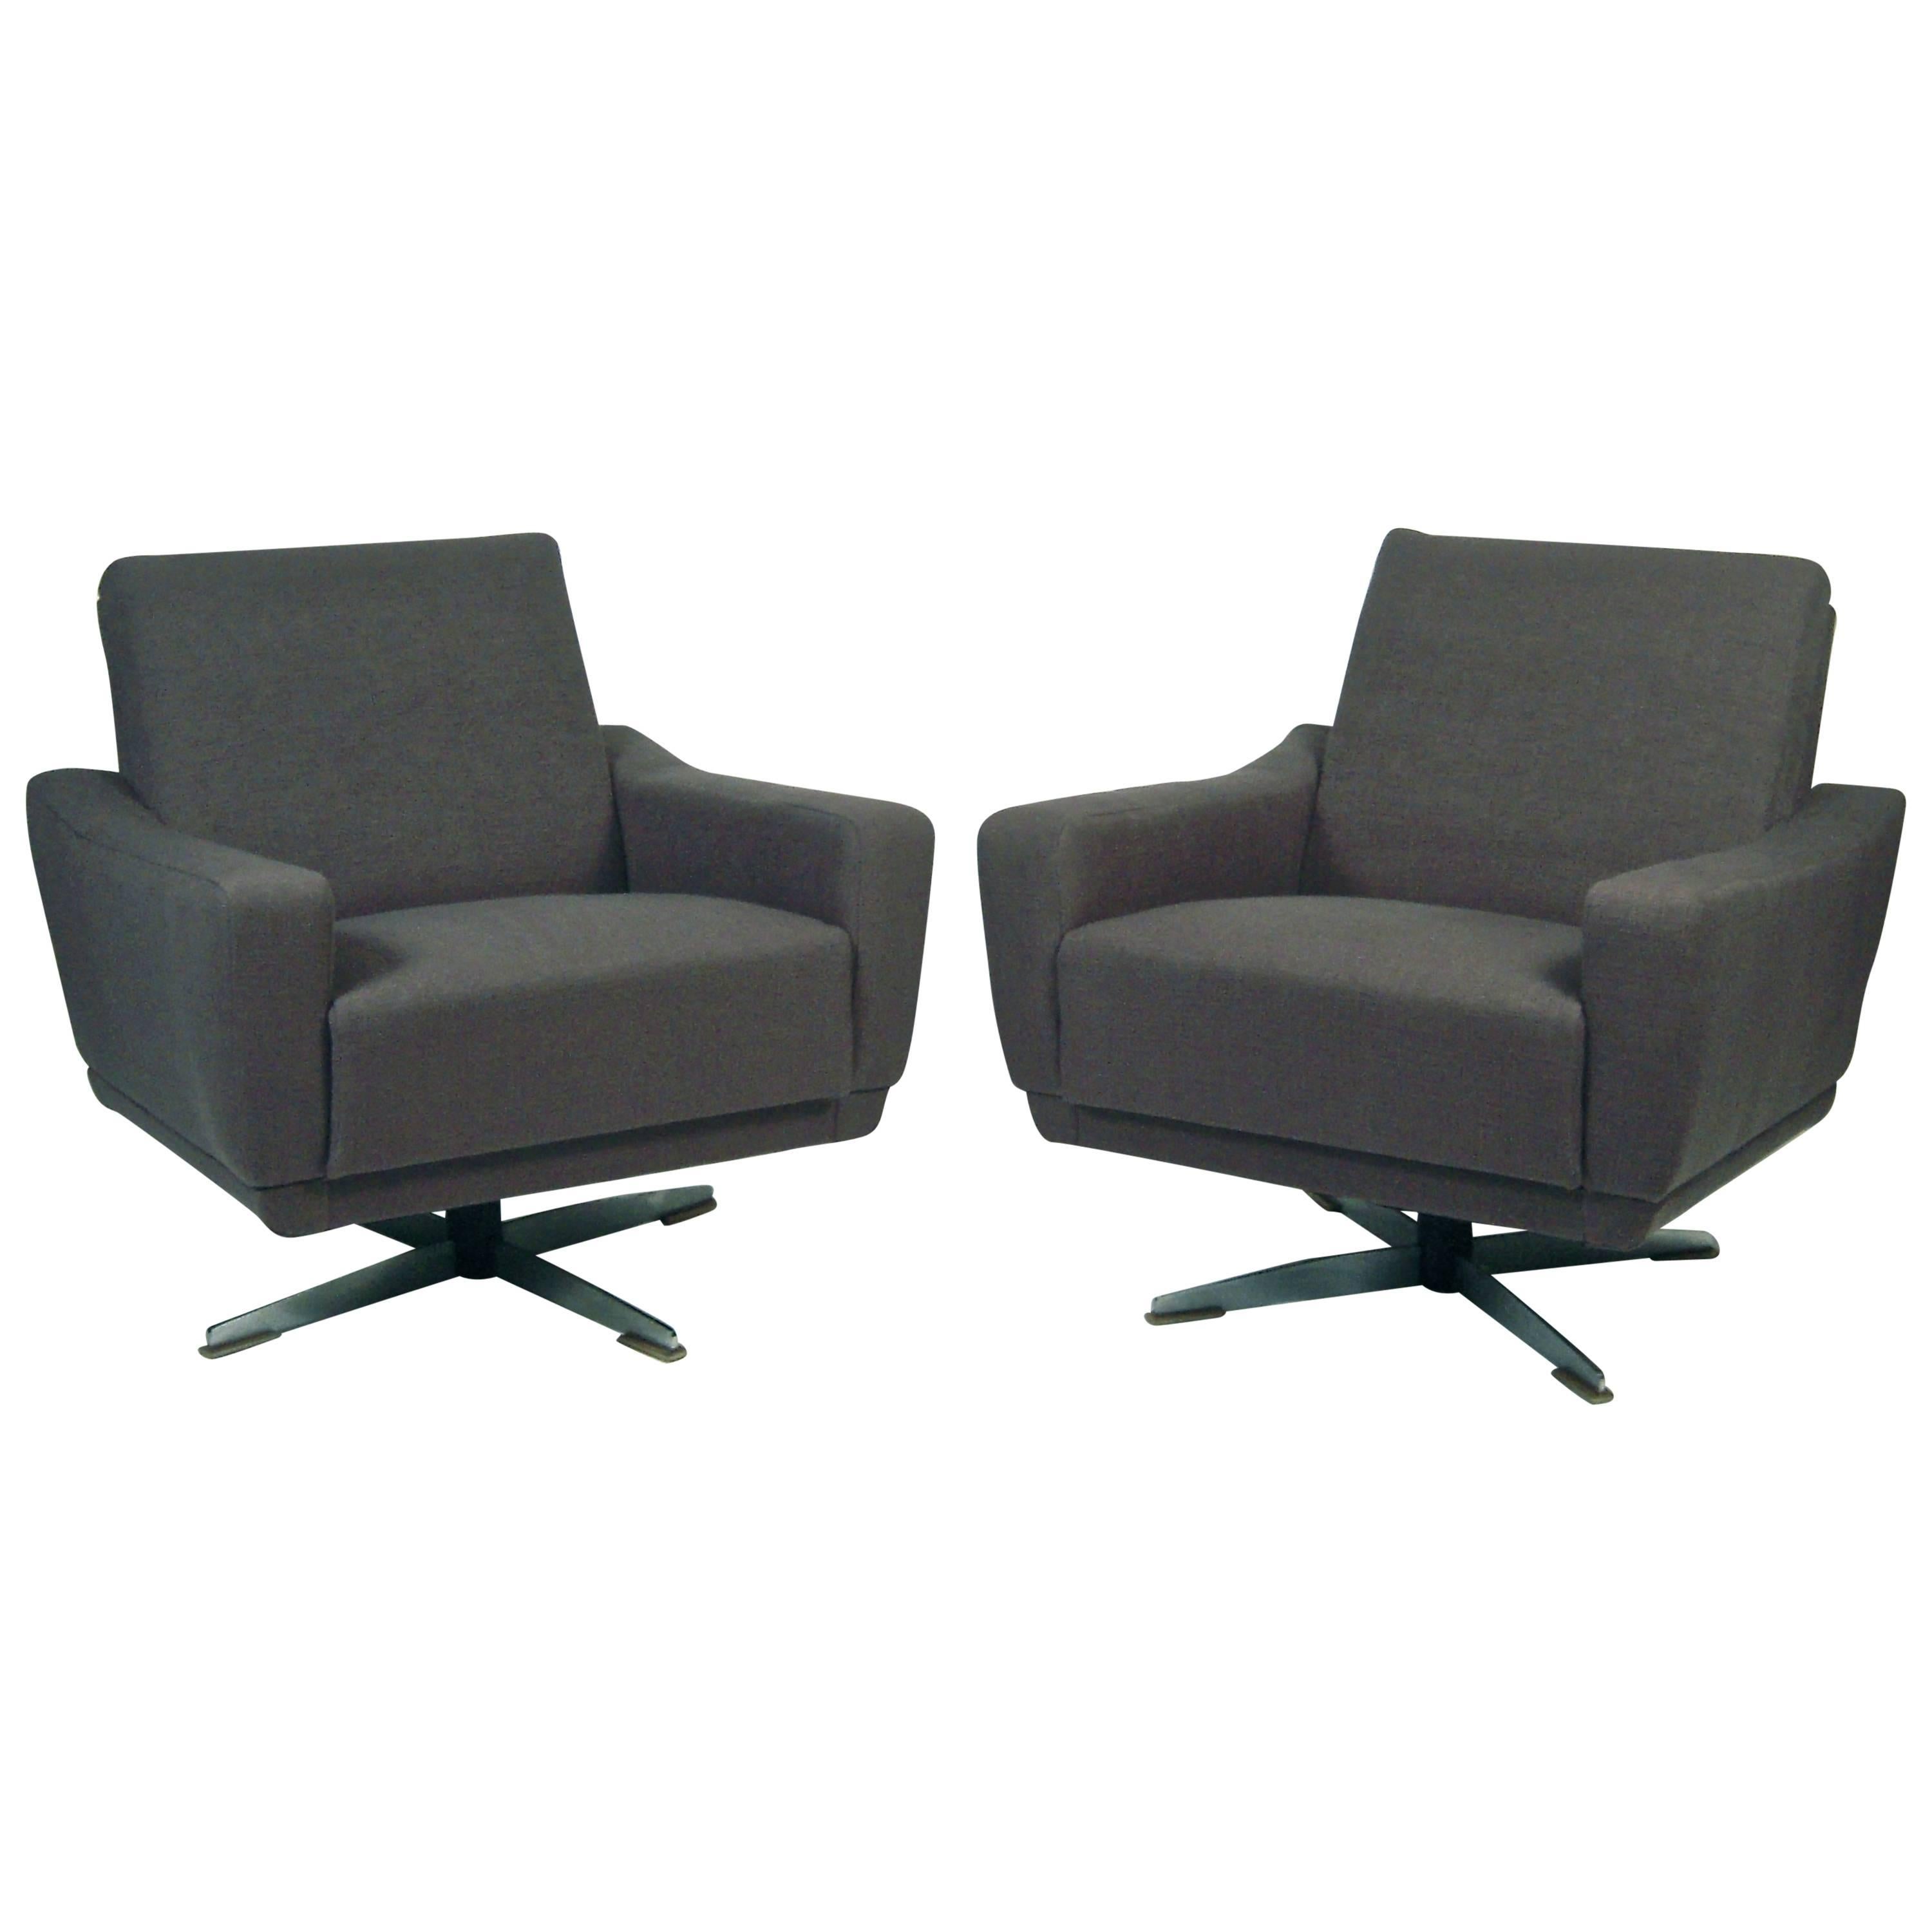 Pair of Unusual and Versatile German Mid-Century Modern Swivel Chairs